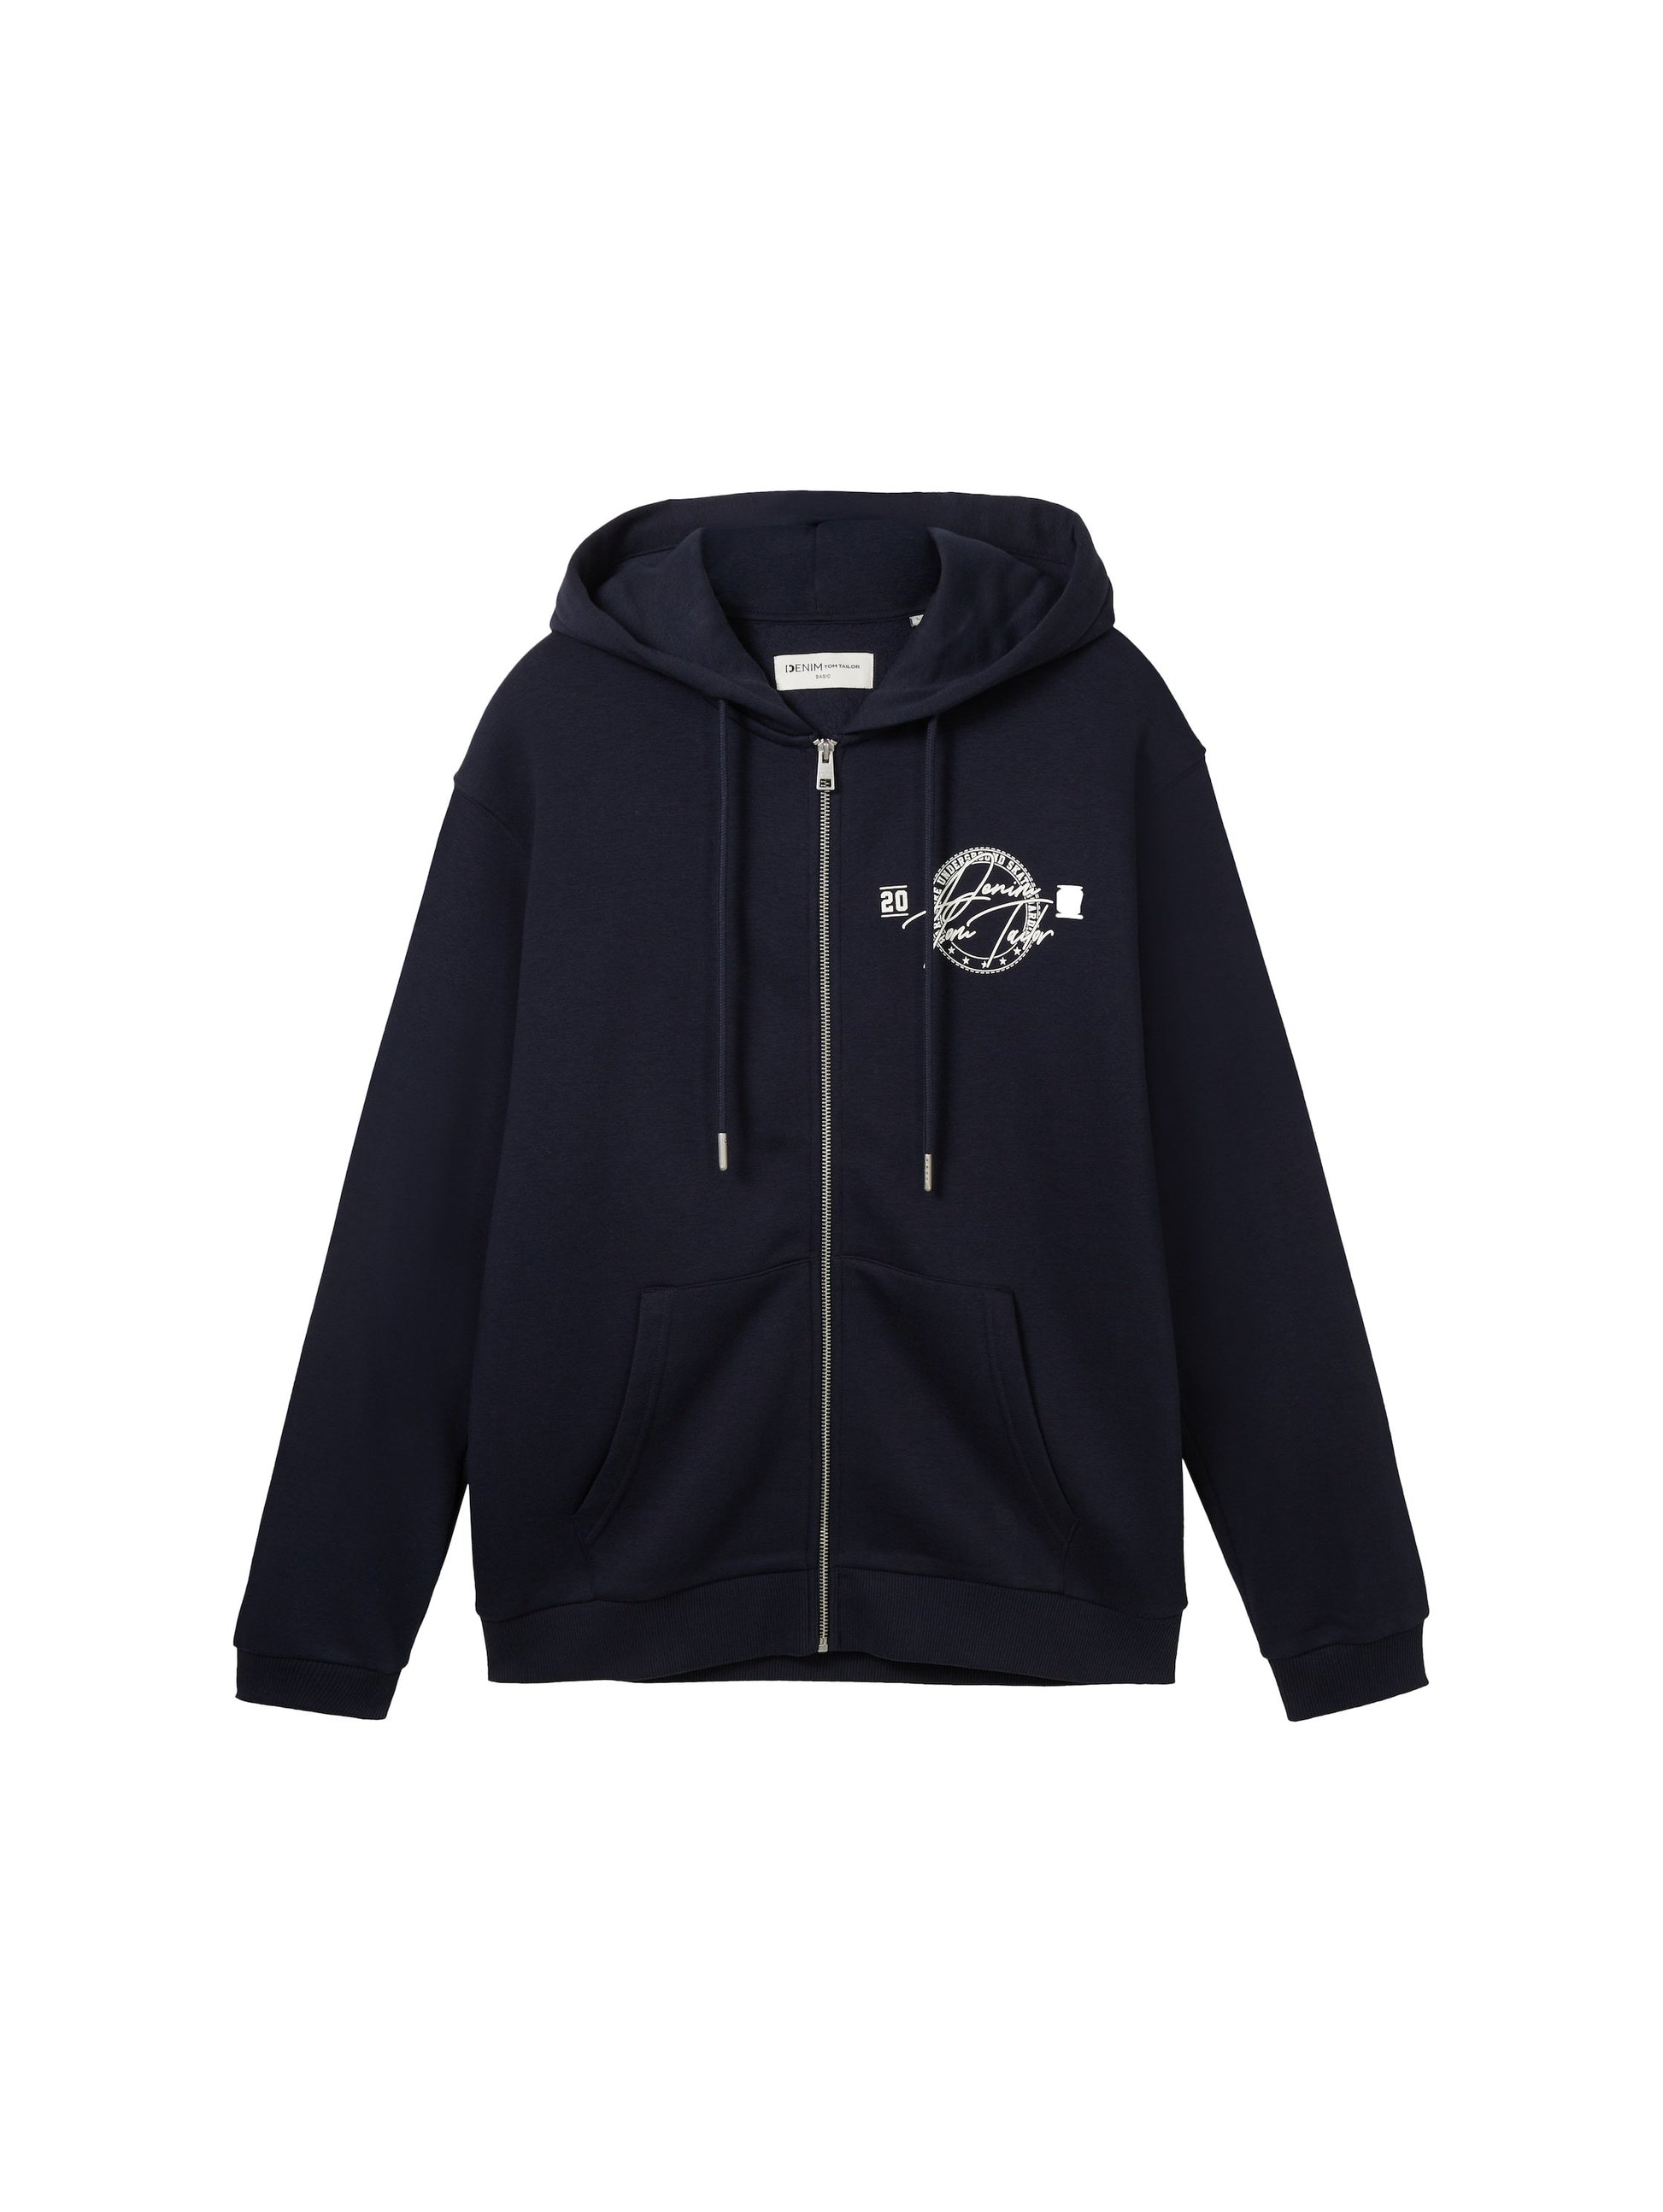 print – Modehaus with Blum-Jundt hoodie jacket